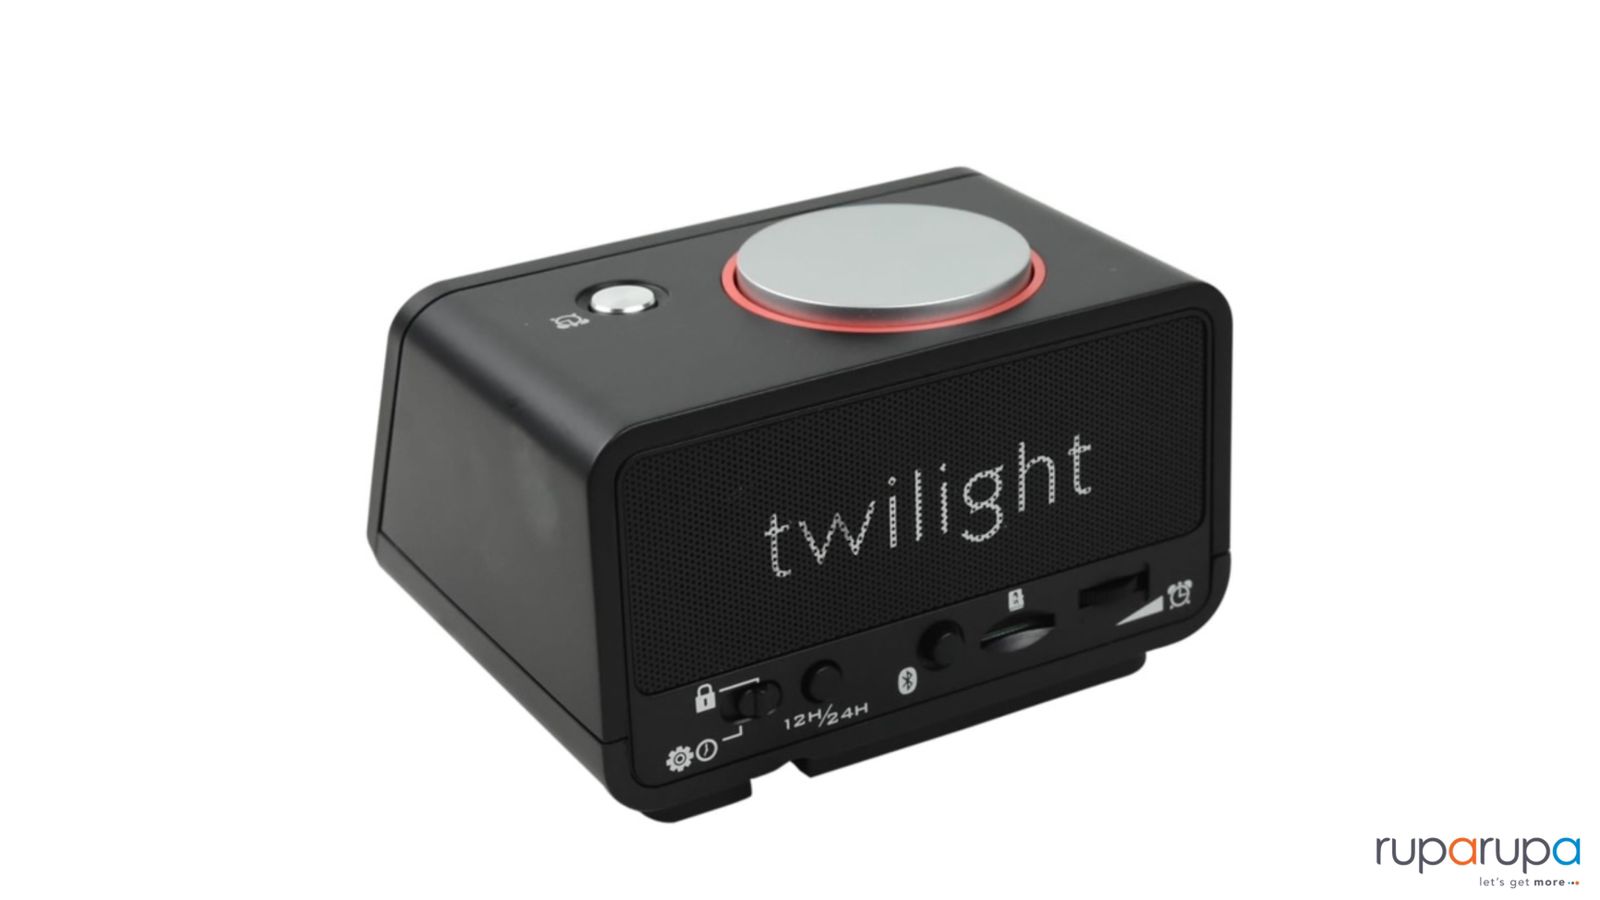 Jam Weker Digital 10x6.6 Cm Dengan Speaker Bluetooth C1